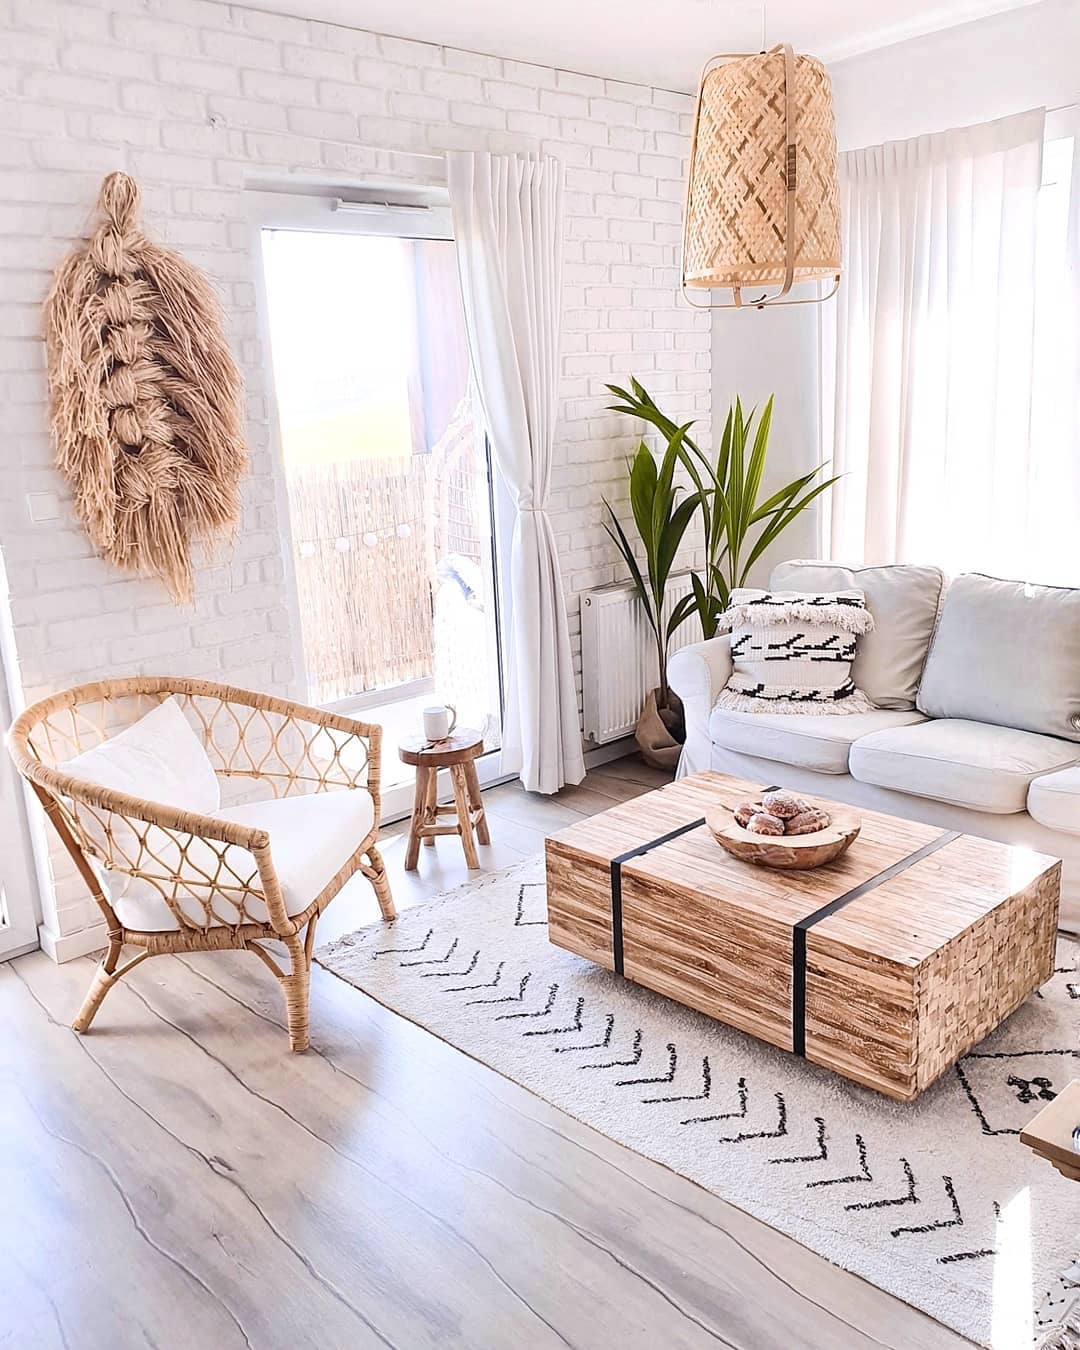 21 Quirky Bohemian Living Room Decor Ideas